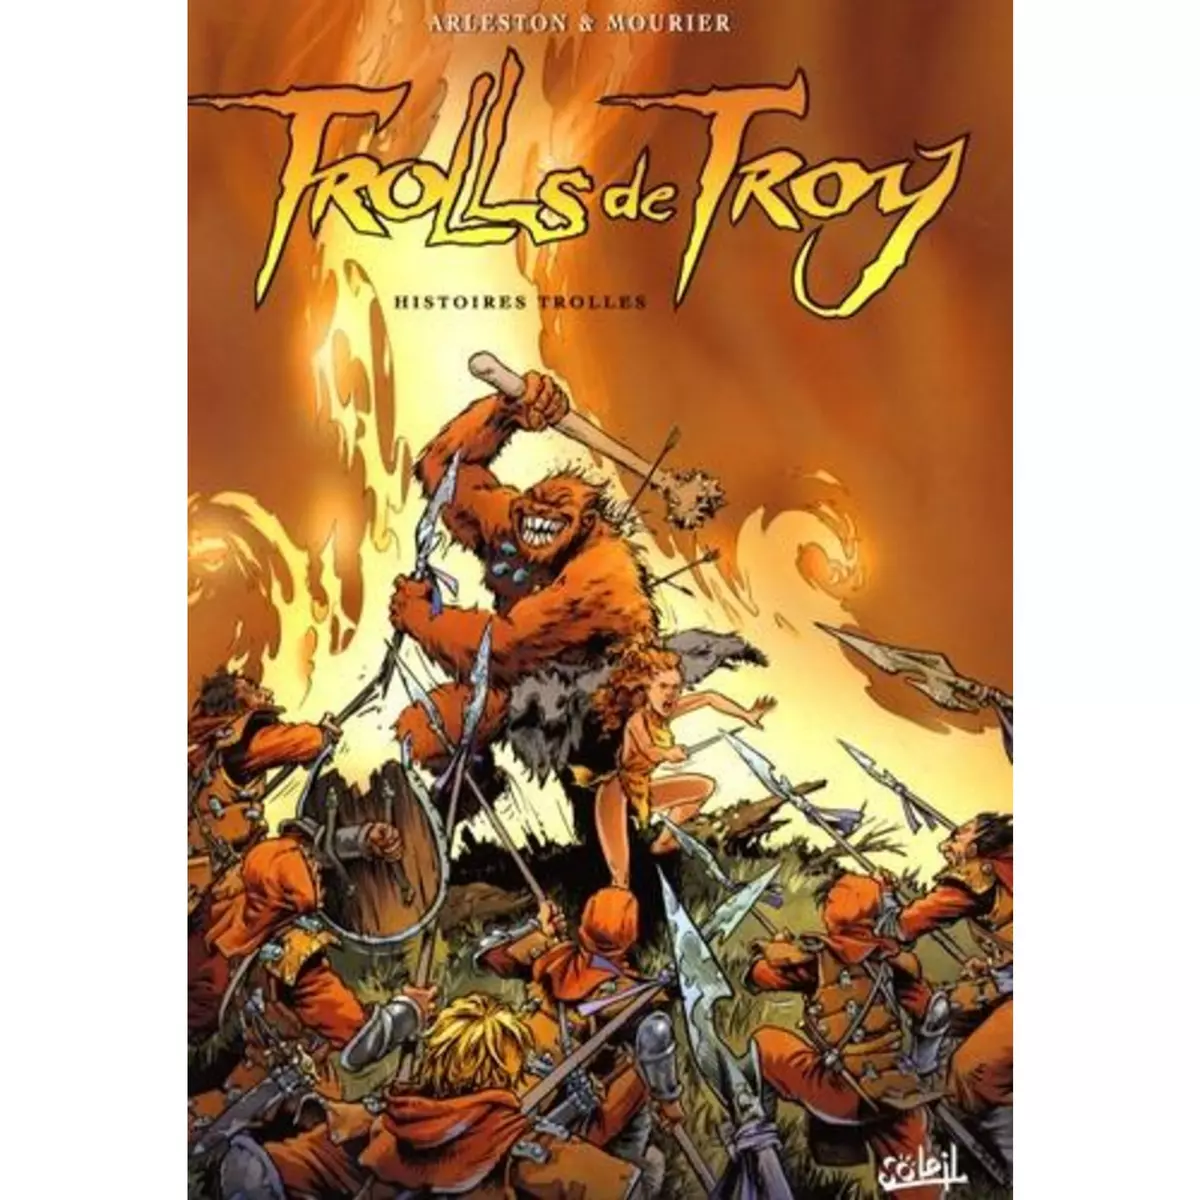  TROLLS DE TROY TOME 1 : HISTOIRES TROLLES, Arleston Christophe